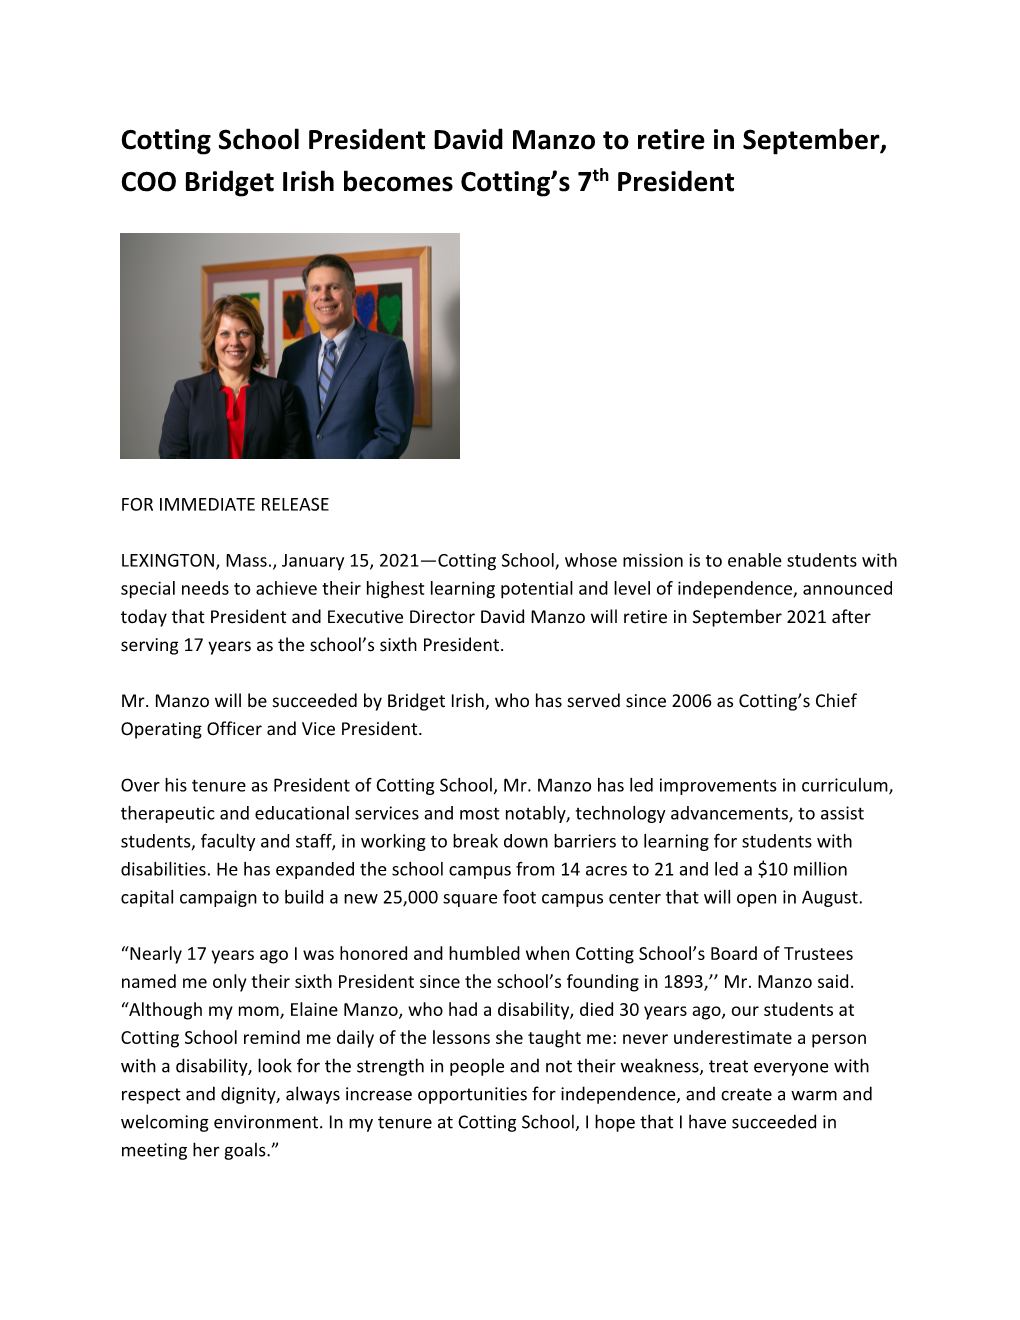 Cotting School President David Manzo to Retire in September, COO Bridget Irish Becomes Cotting’S 7Th President